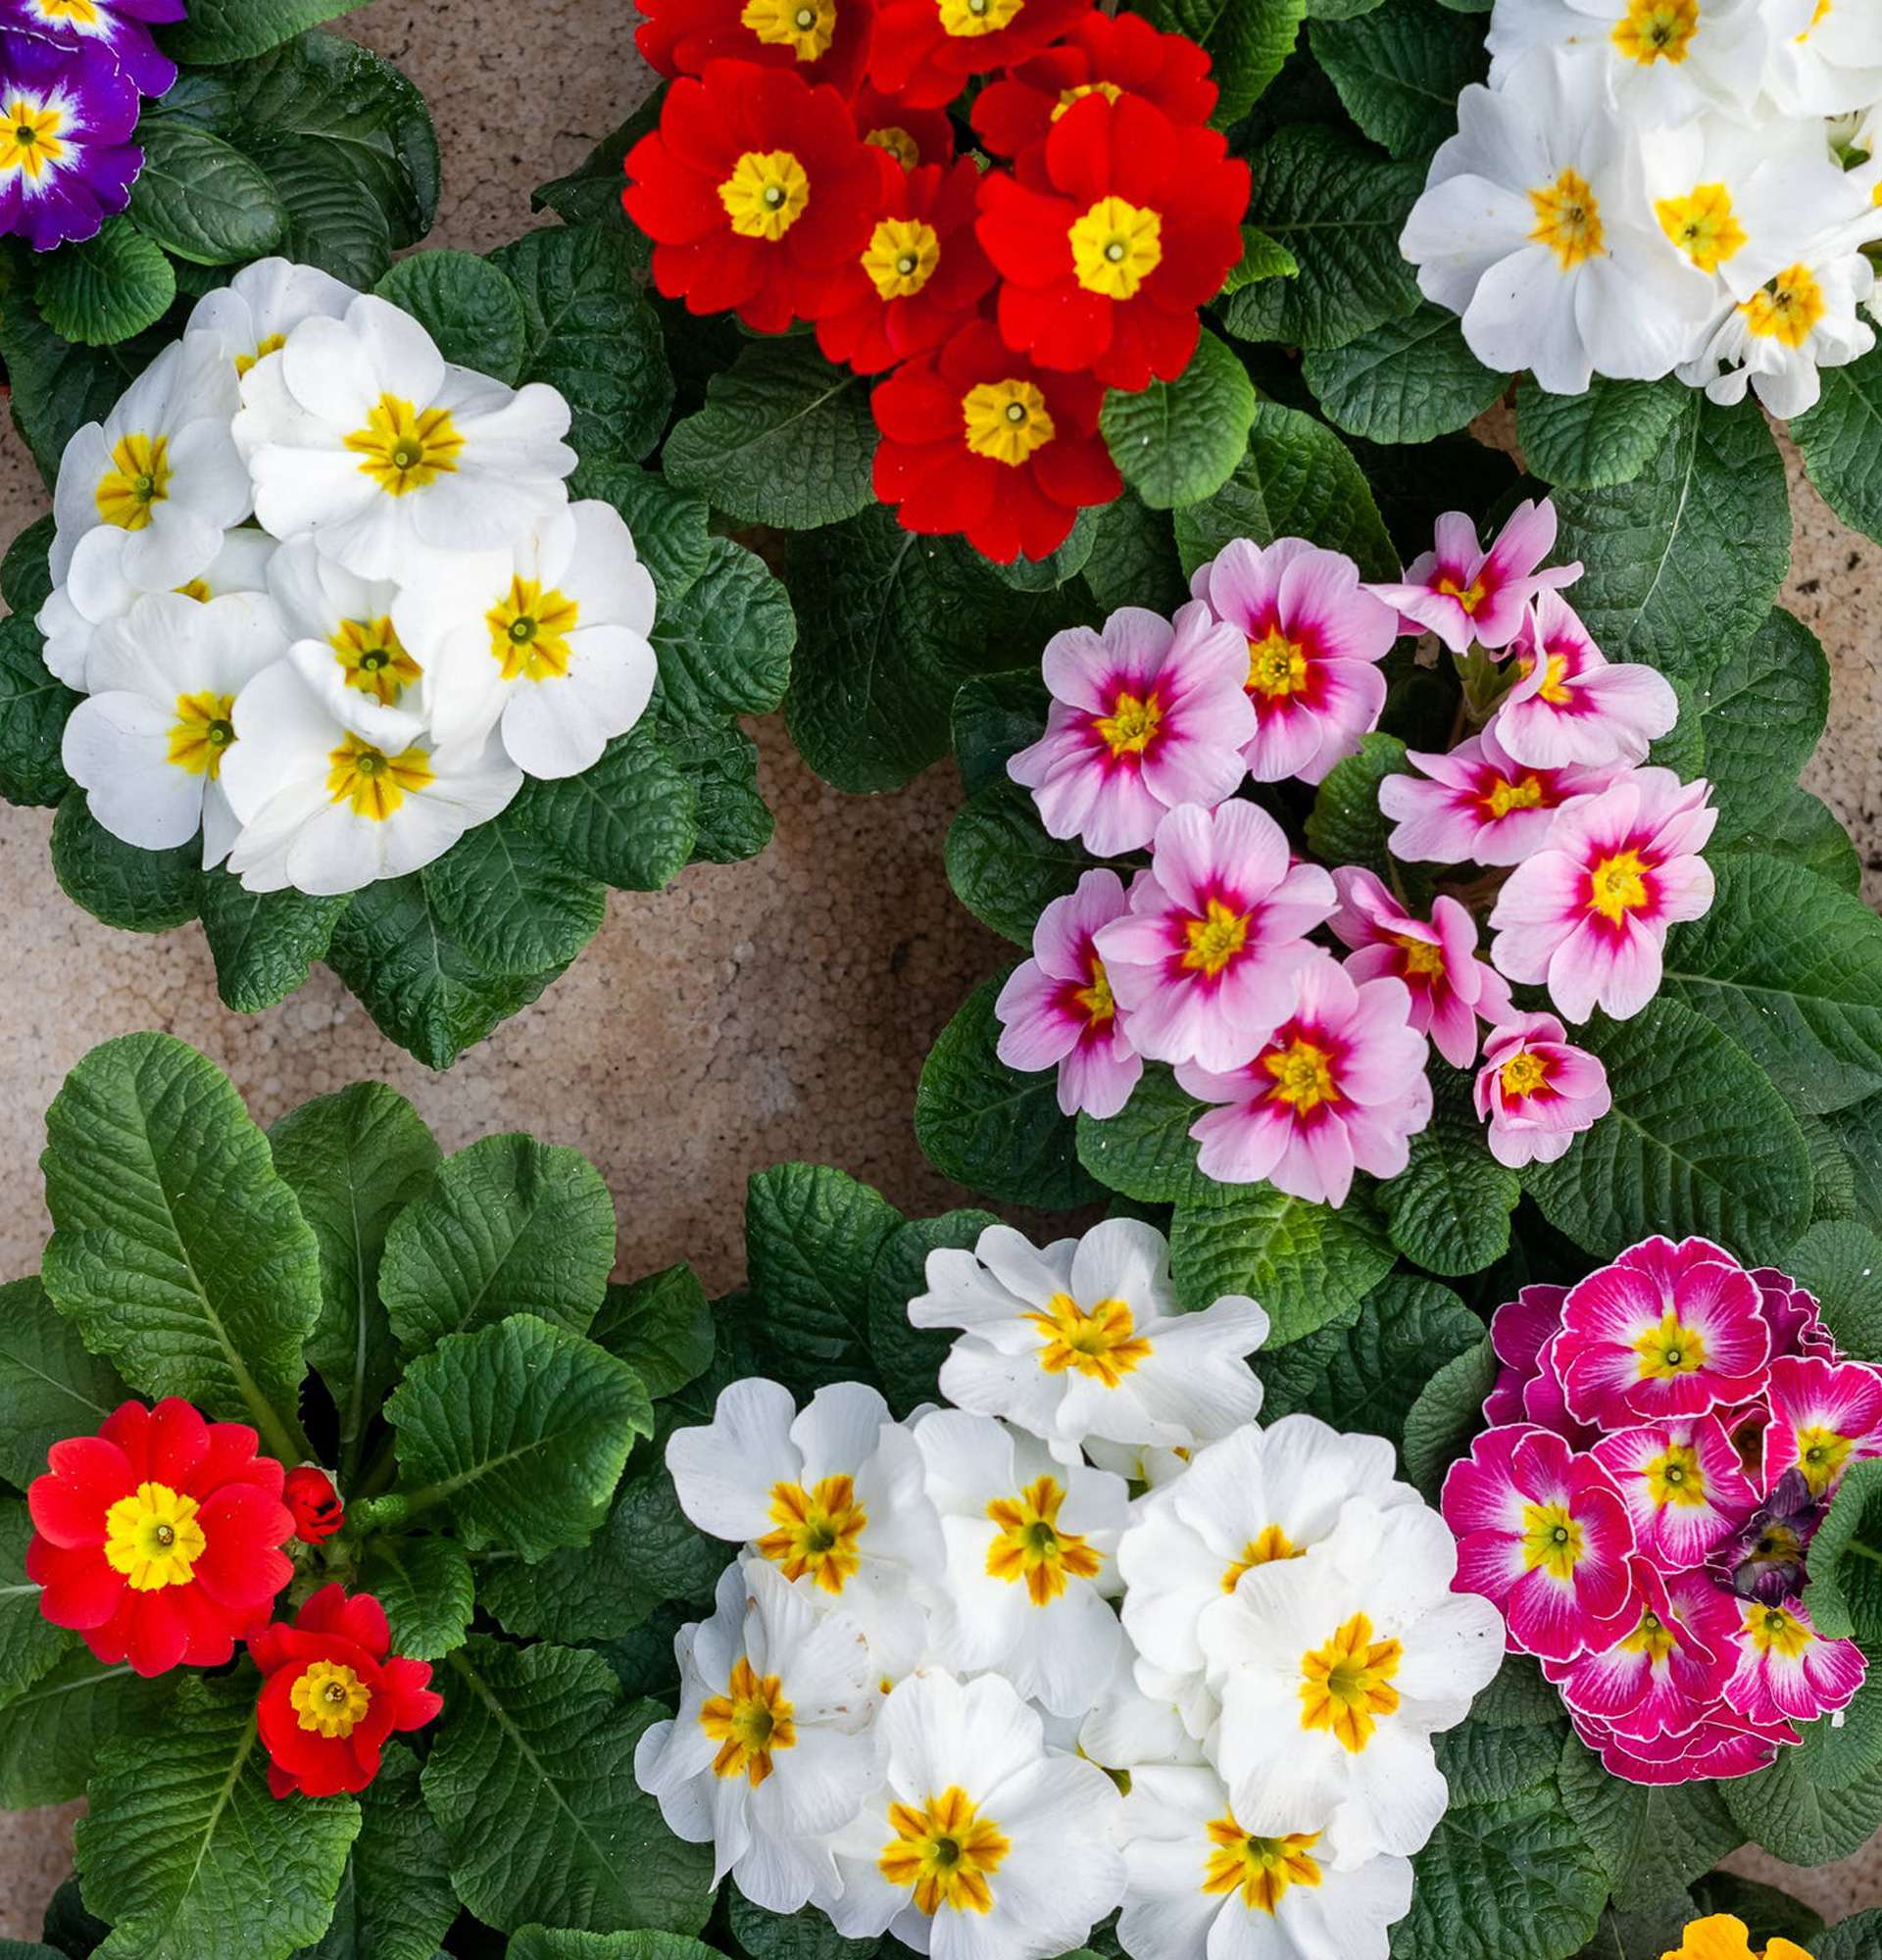 flowering plants in pots photo - multi-colored primroses